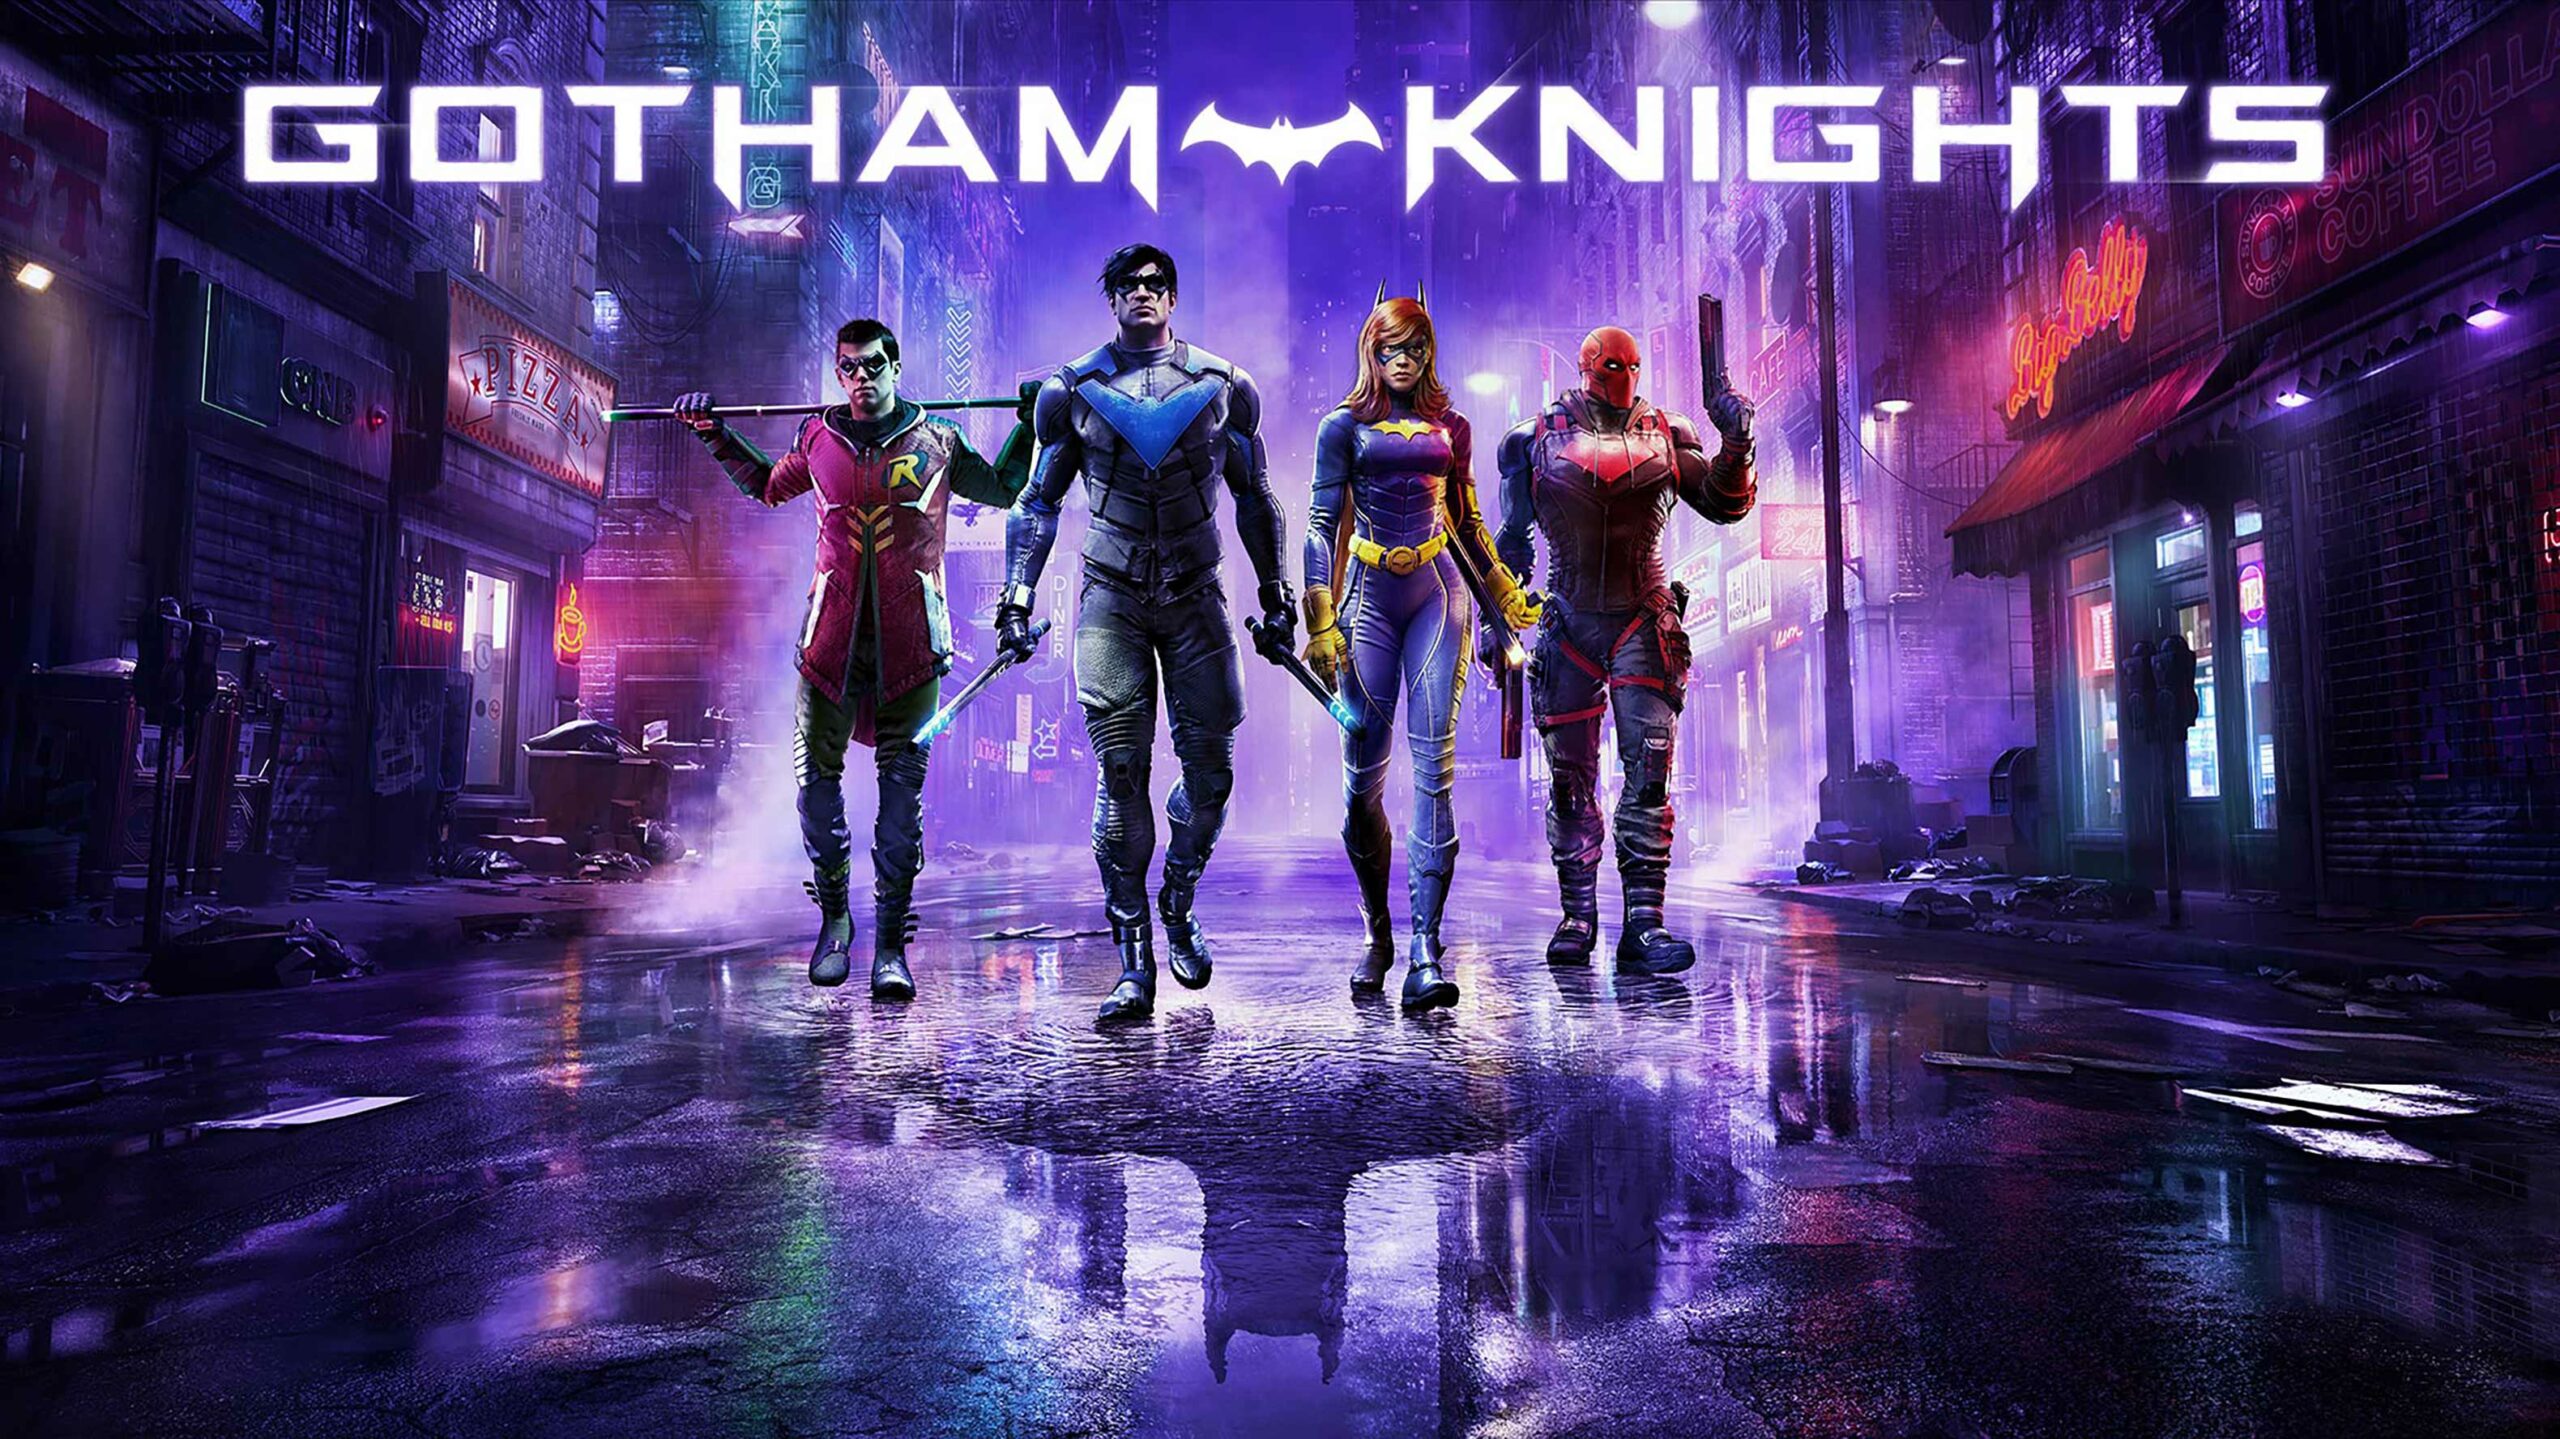 Gotham Knights cover art. Robin, Nightwing, Batgirl and Red Hood walk through an alley.